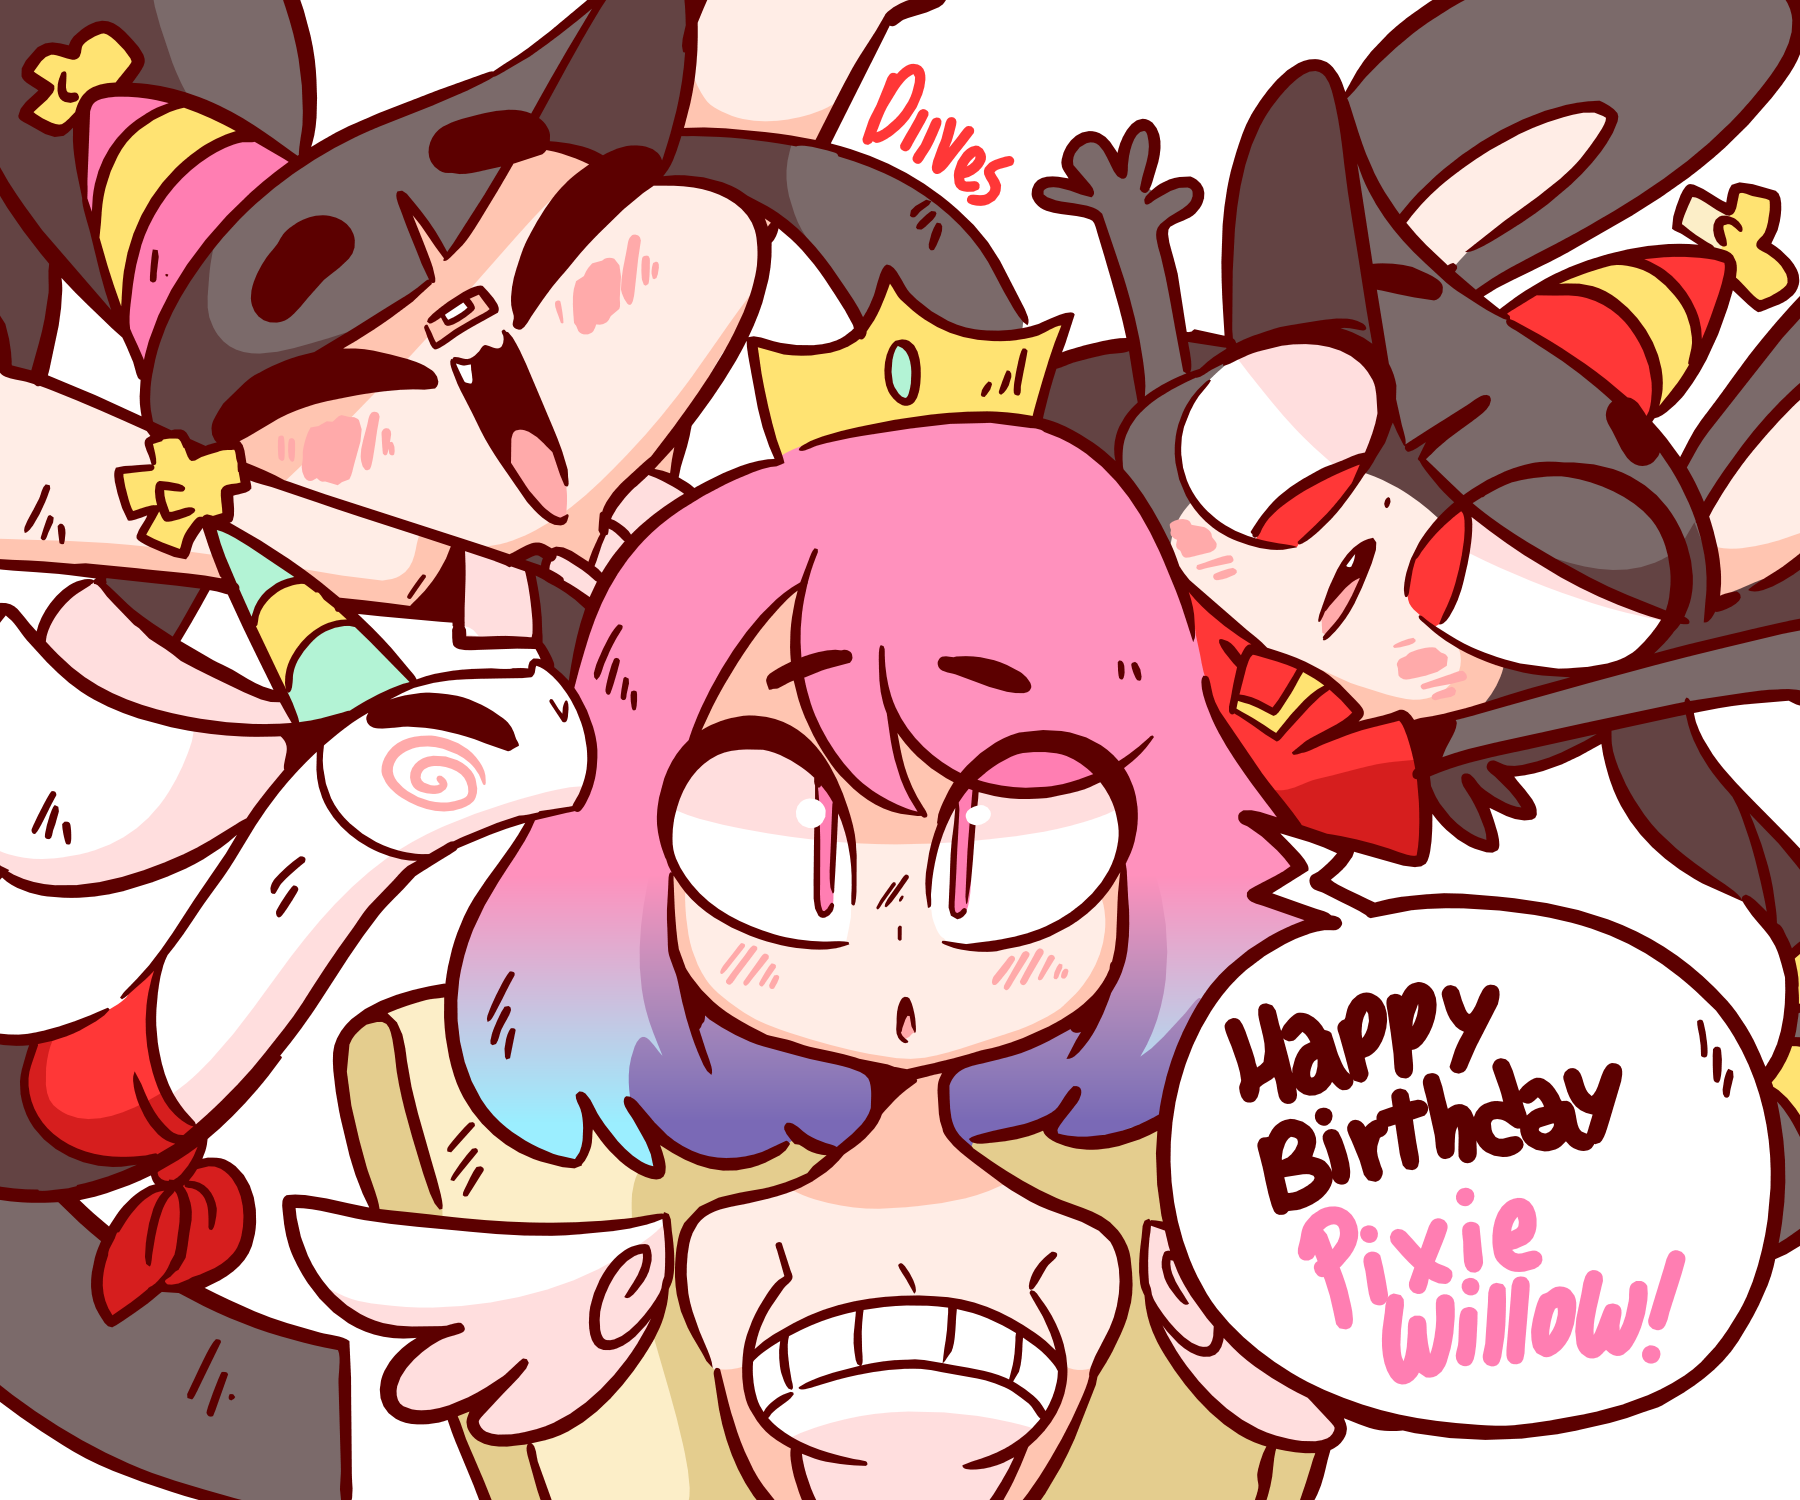 Pixie's Birthday插画图片壁纸